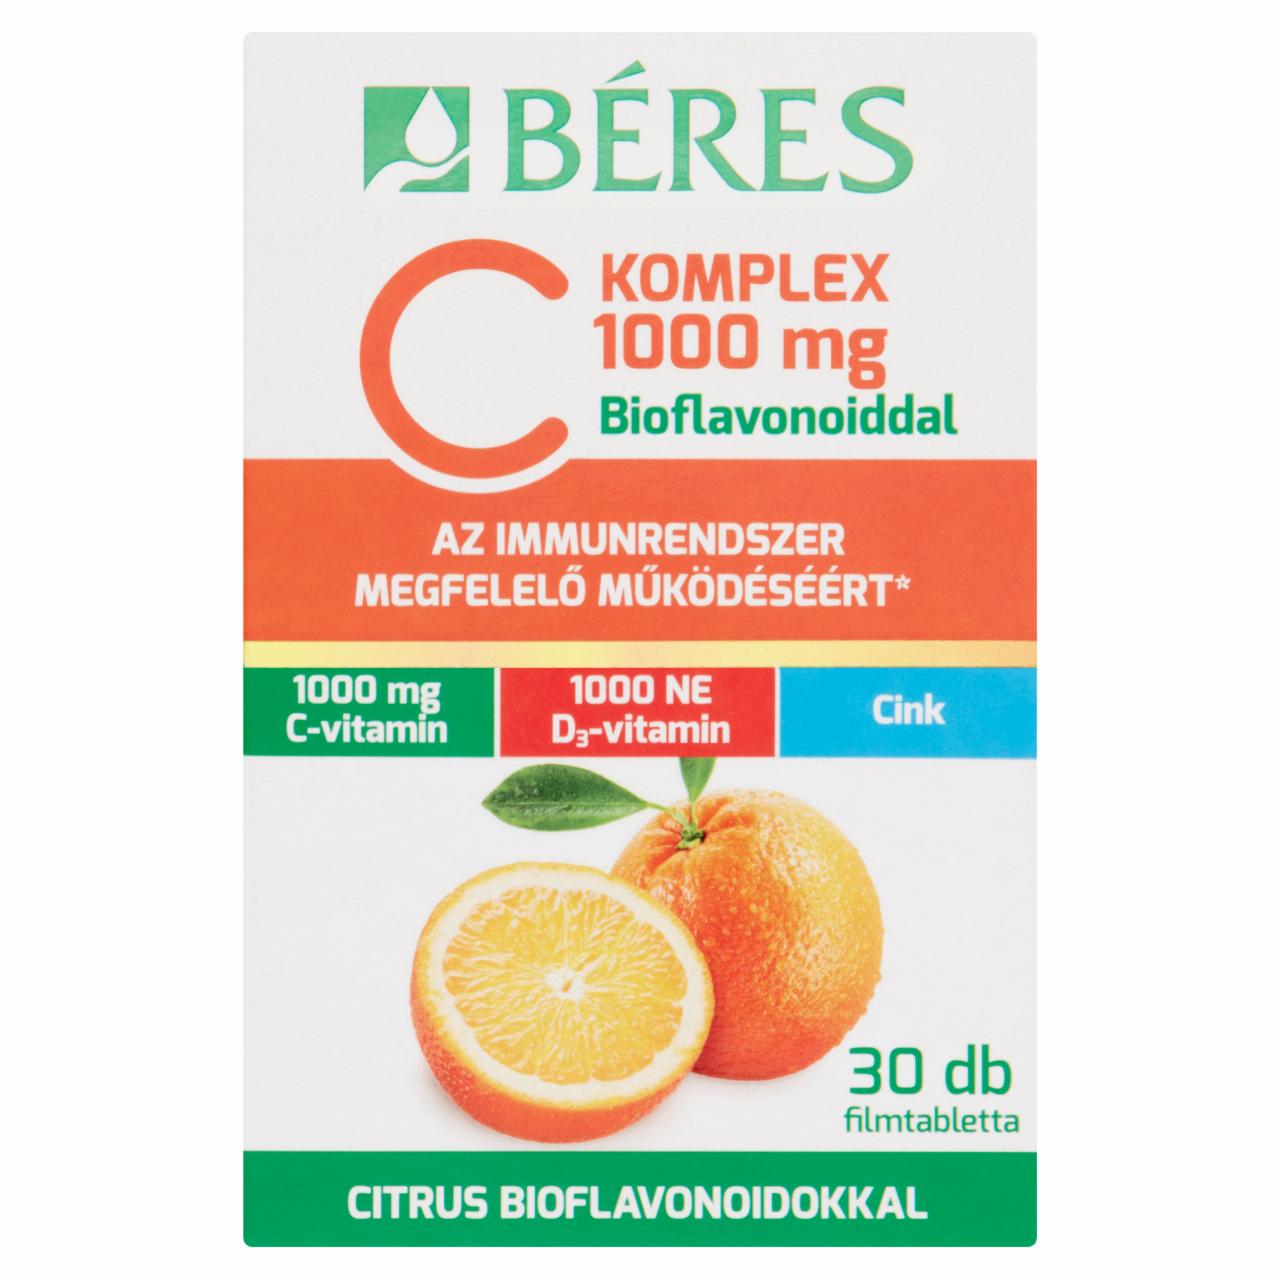 Képek - Béres C Komplex 1000 mg C-vitamin, D₃-vitamin, cink étrend-kiegészítő filmtabletta 30 db 50,9 g